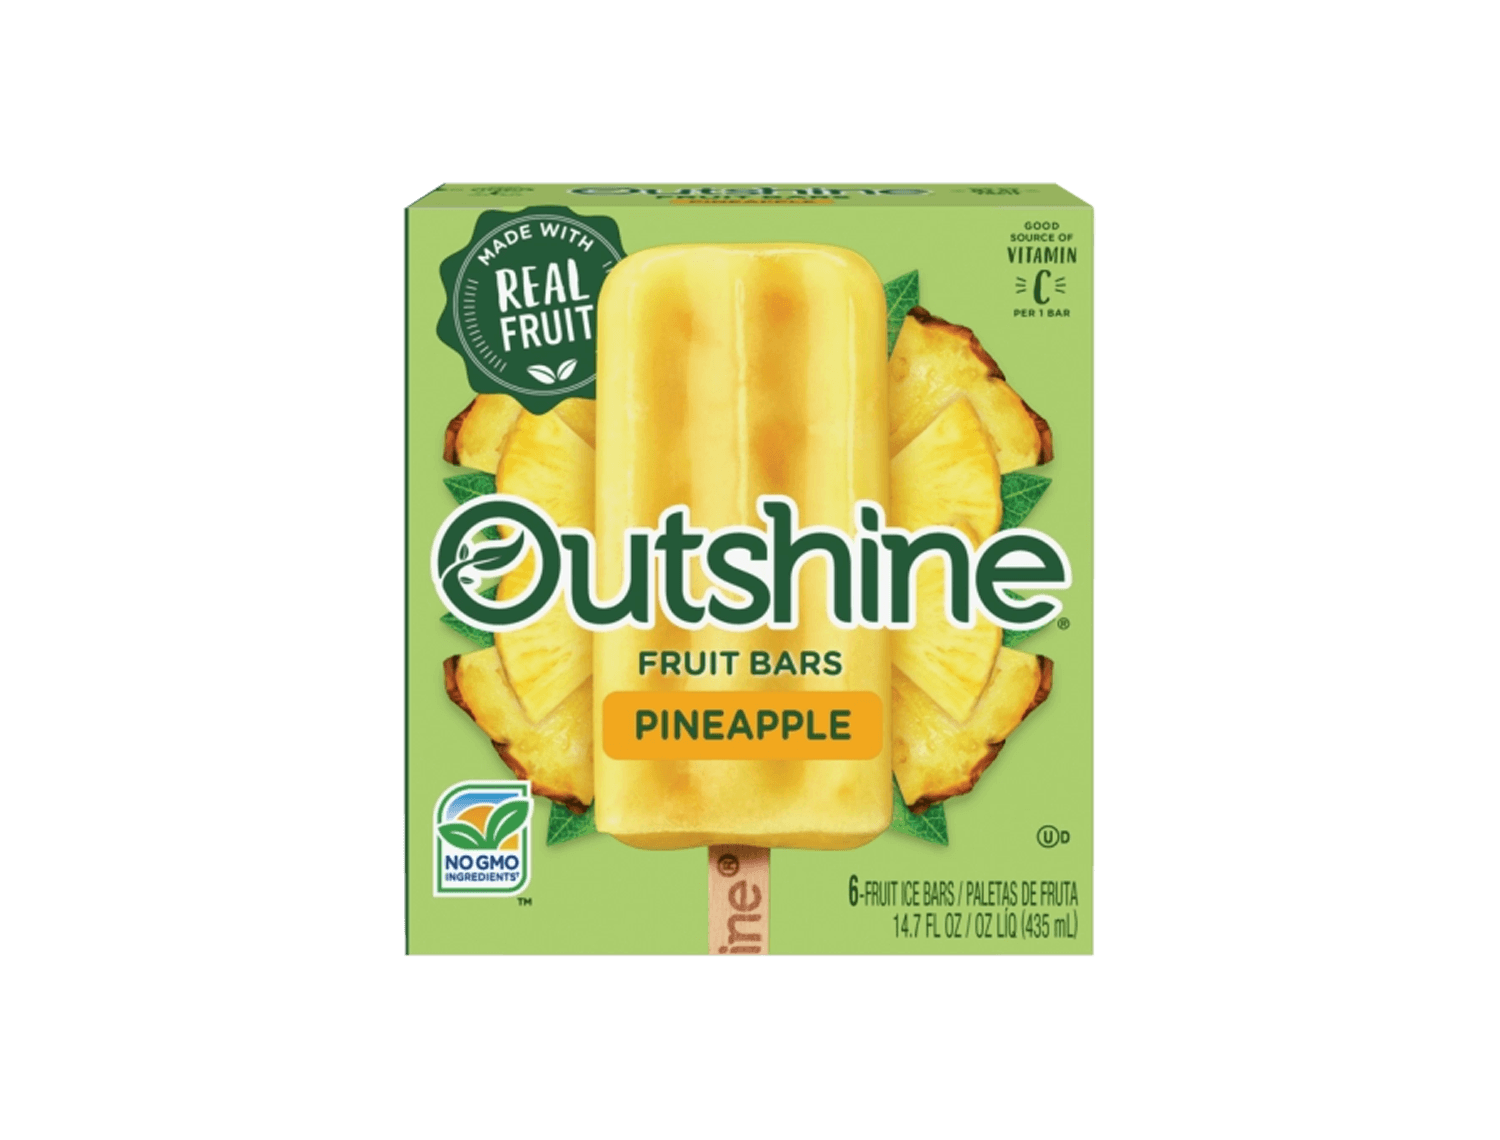 box of Outshine pineapple fruit bars